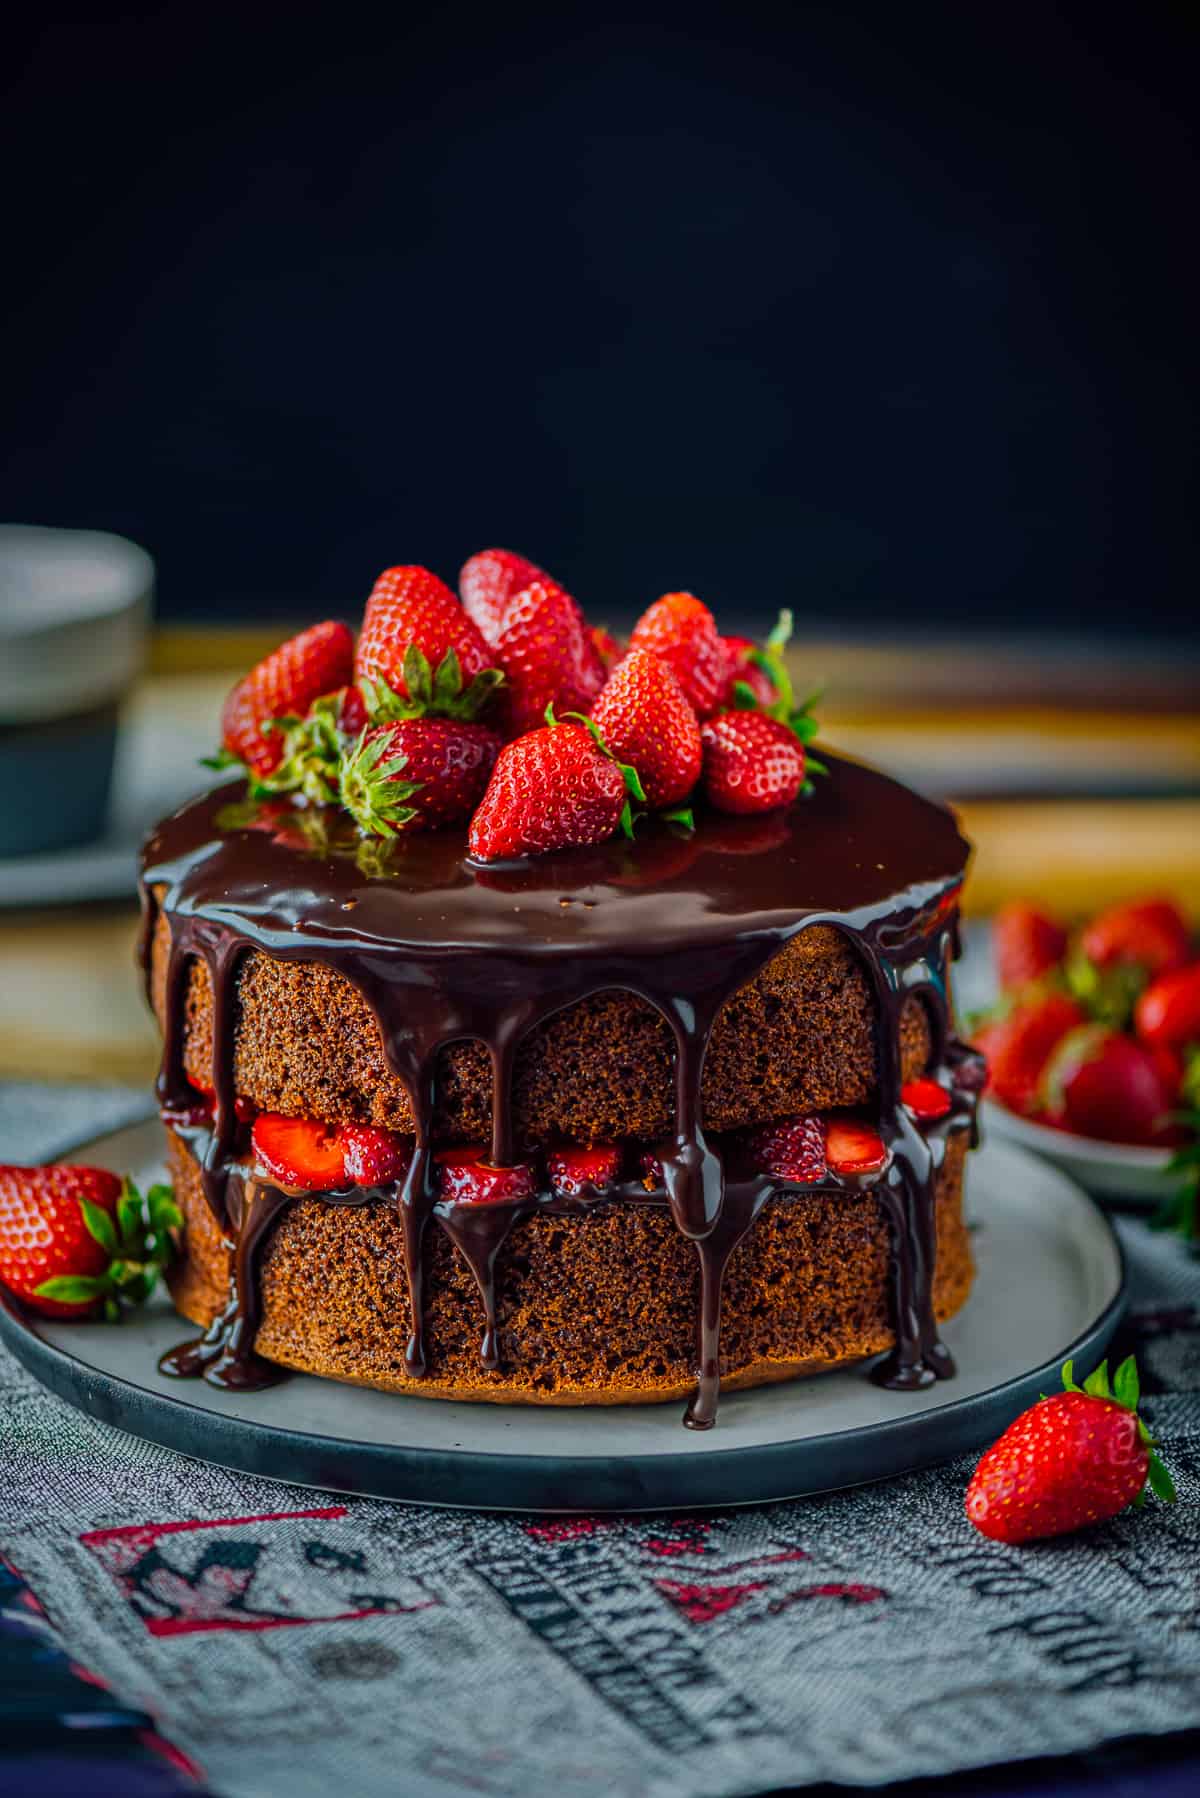 Chocolate cake with ganache and strawberries on a plate, strawberries around.